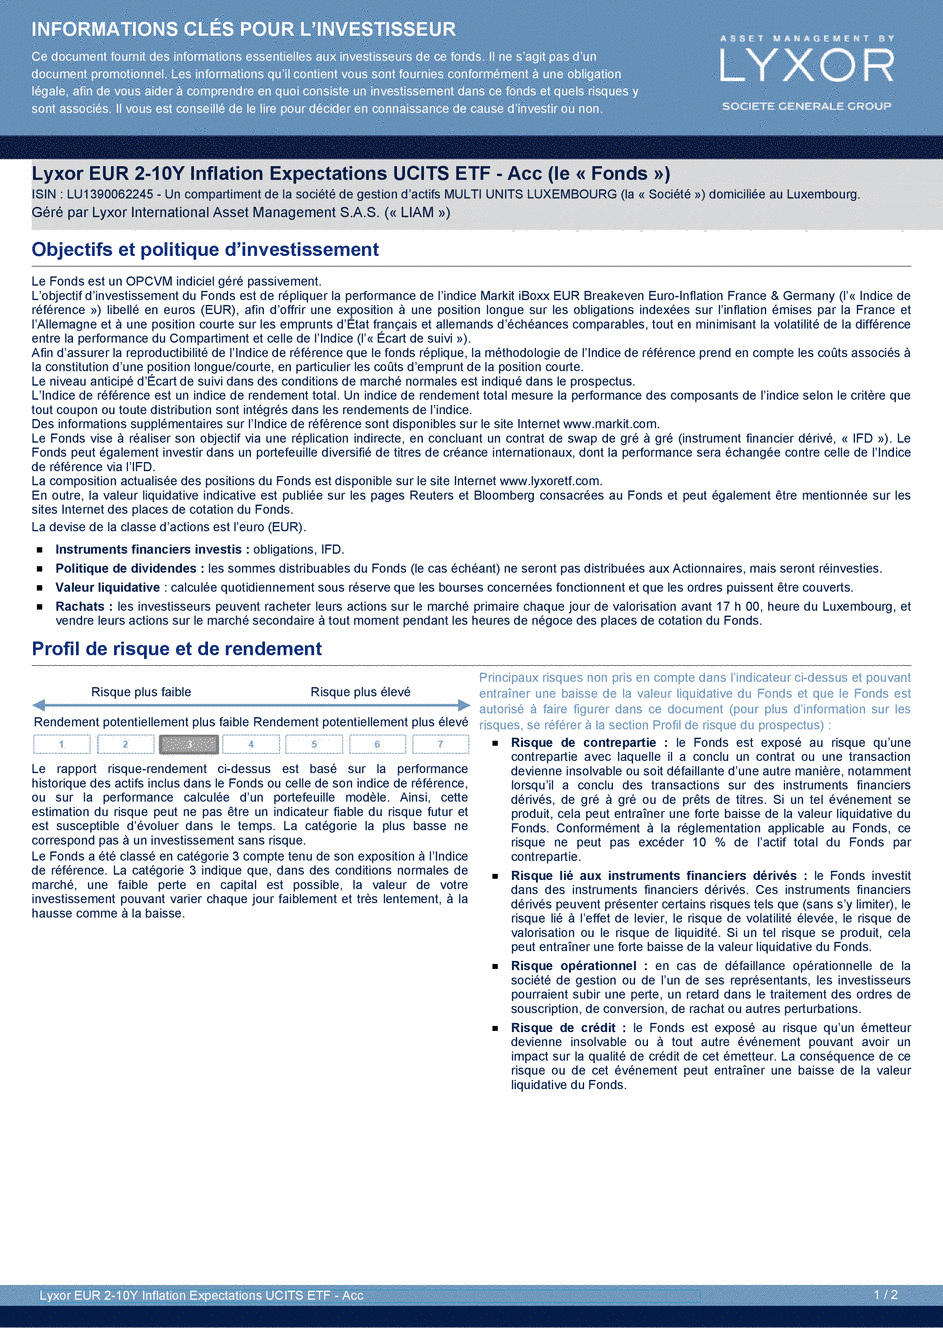 DICI Lyxor EUR 2-10Y Inflation Expectations UCITS ETF - Acc - 19/02/2021 - Français